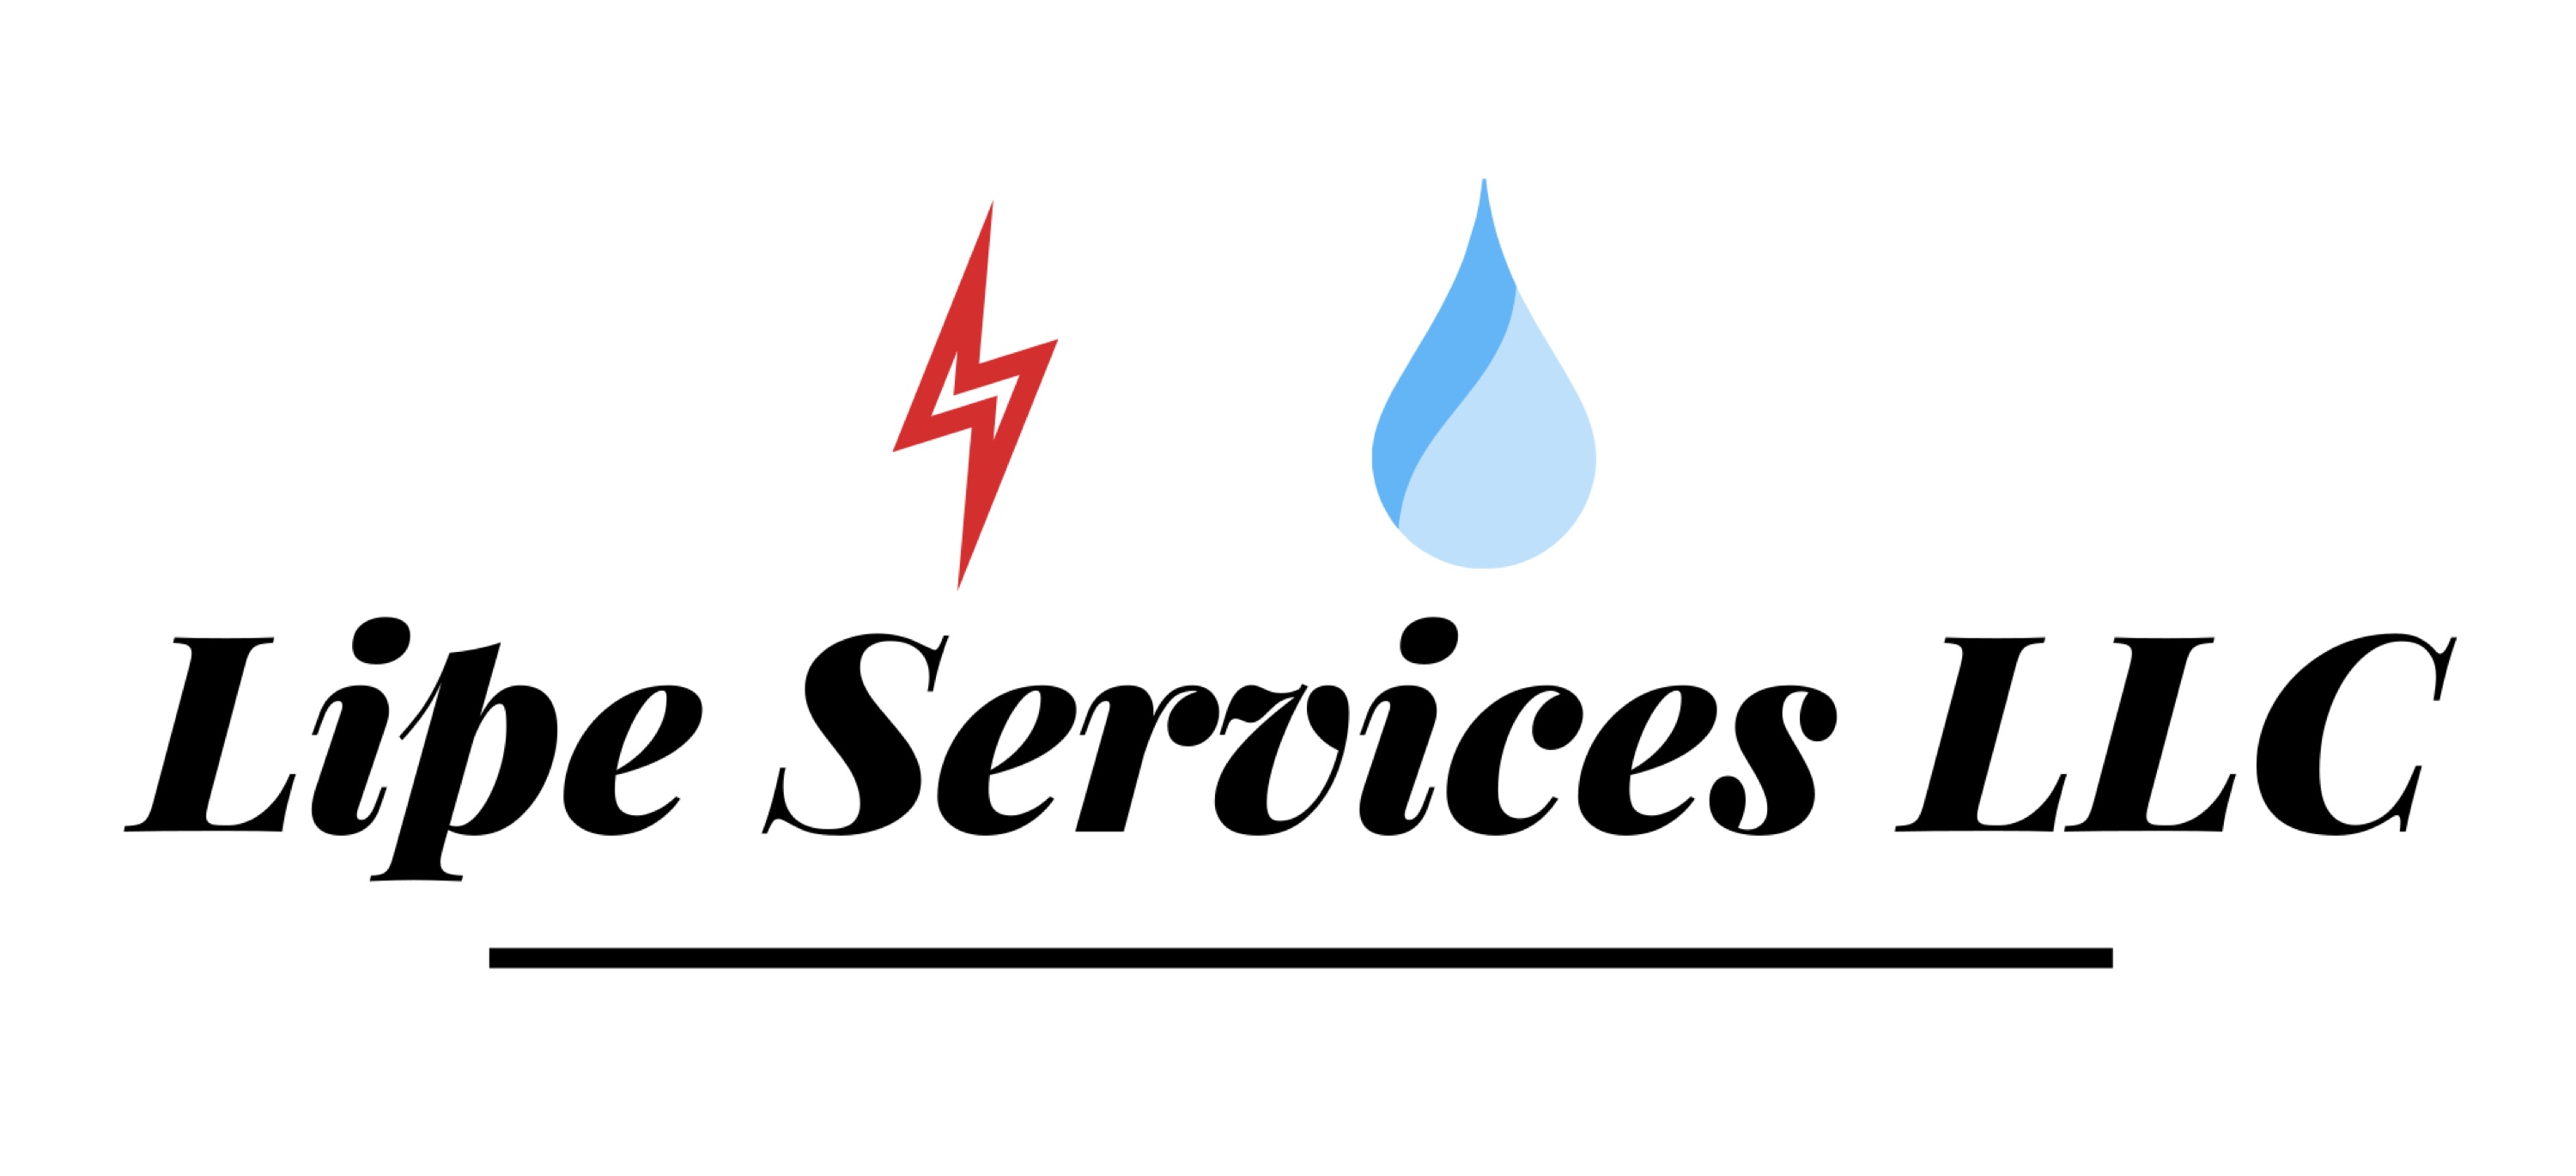 Lipe Services Logo